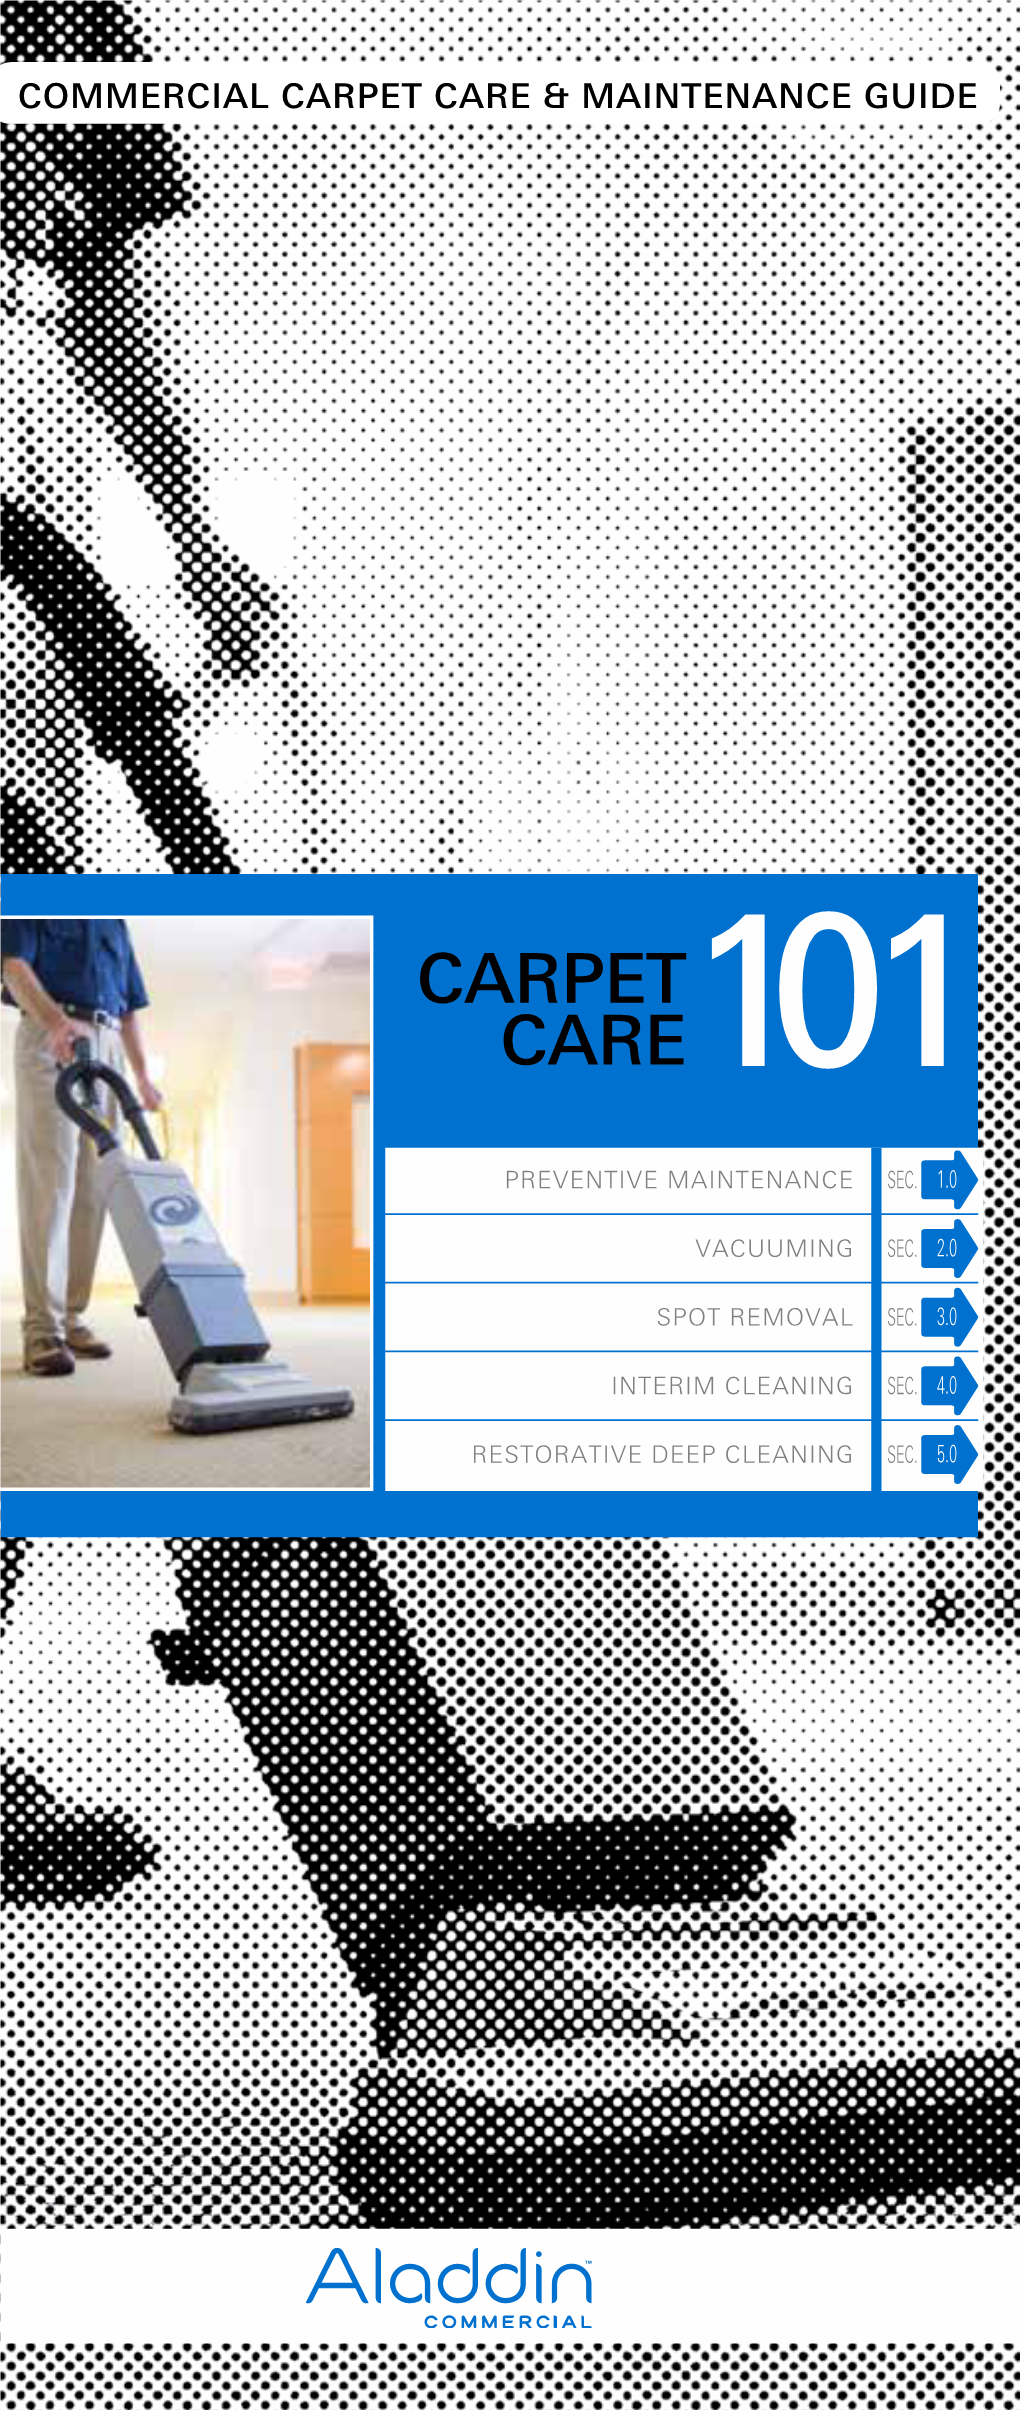 Carpet Care & Maintenance Guide